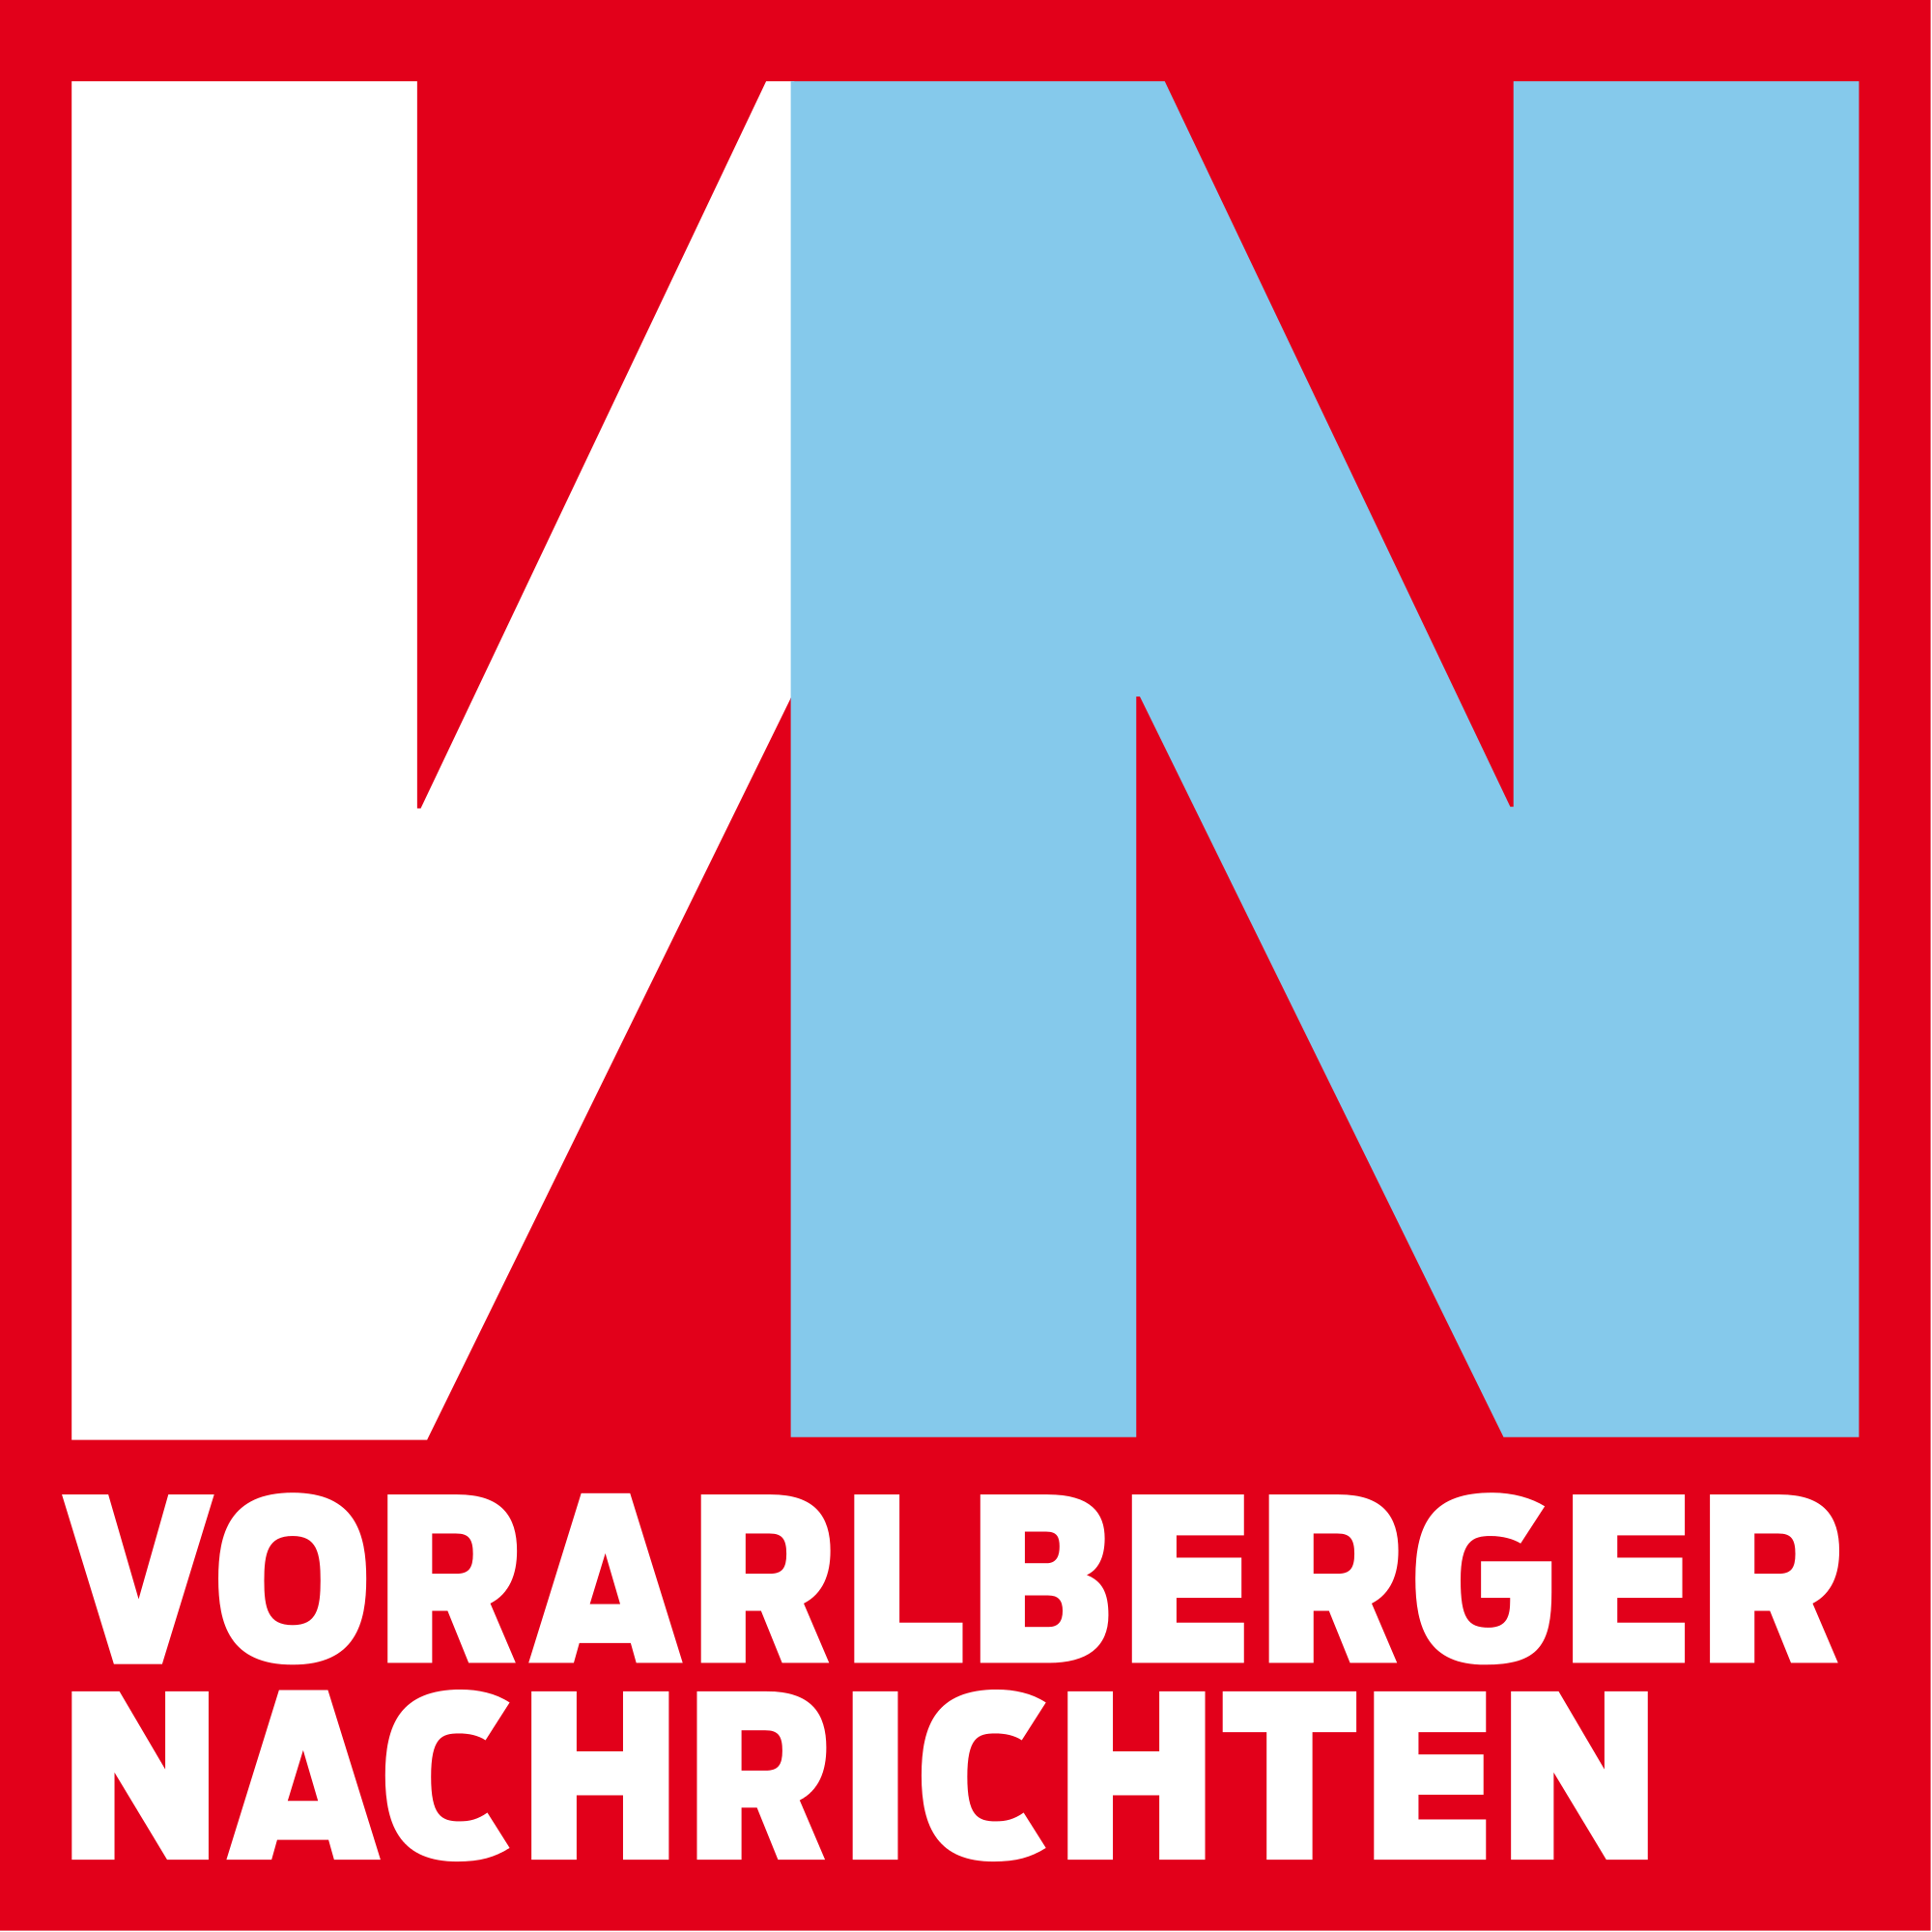 VN Logo - File:VN-Logo-2010.svg - Wikimedia Commons